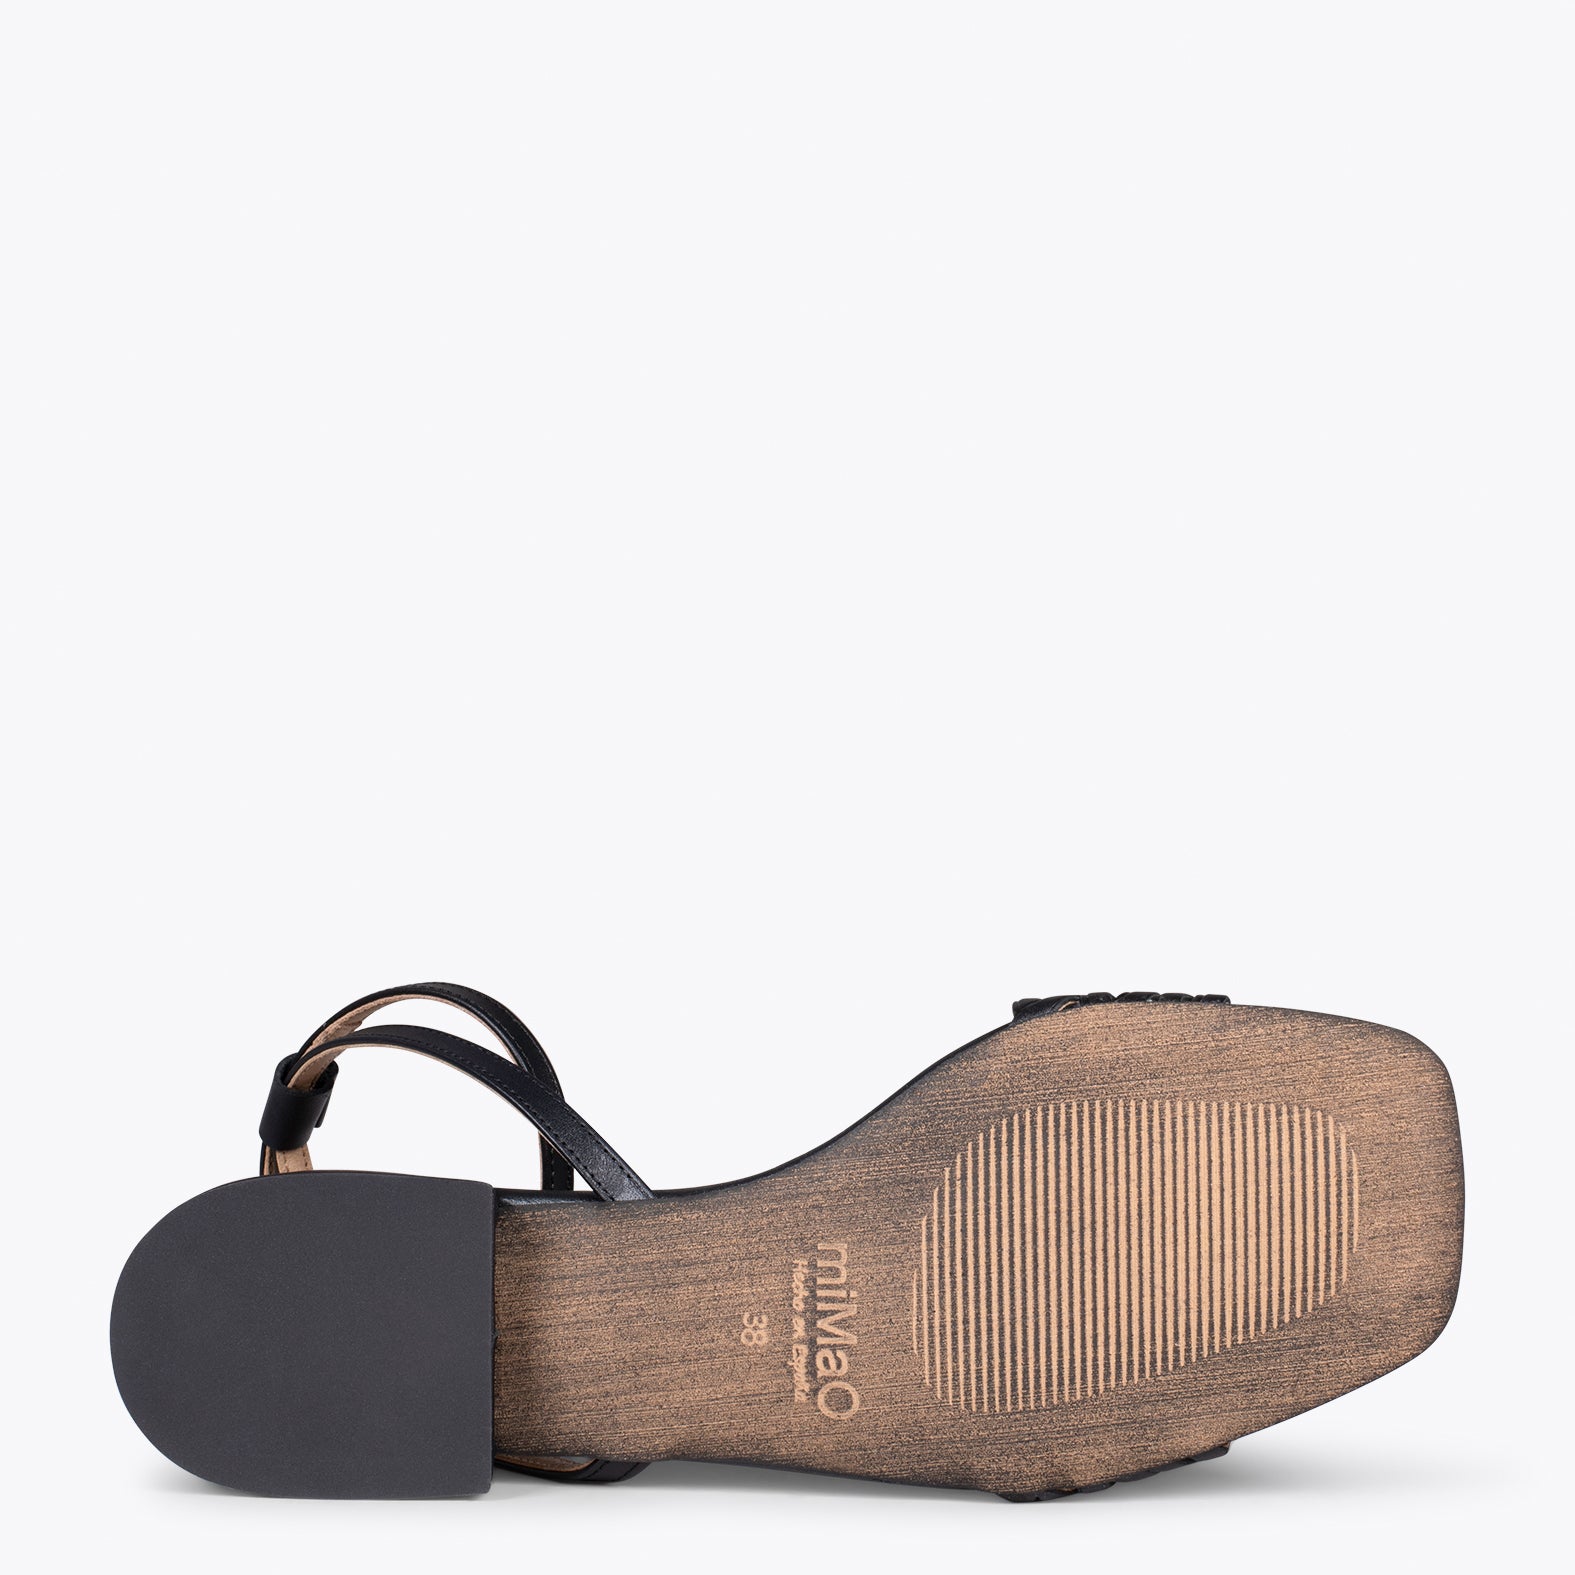 SOFIA – BLACK flat sandals